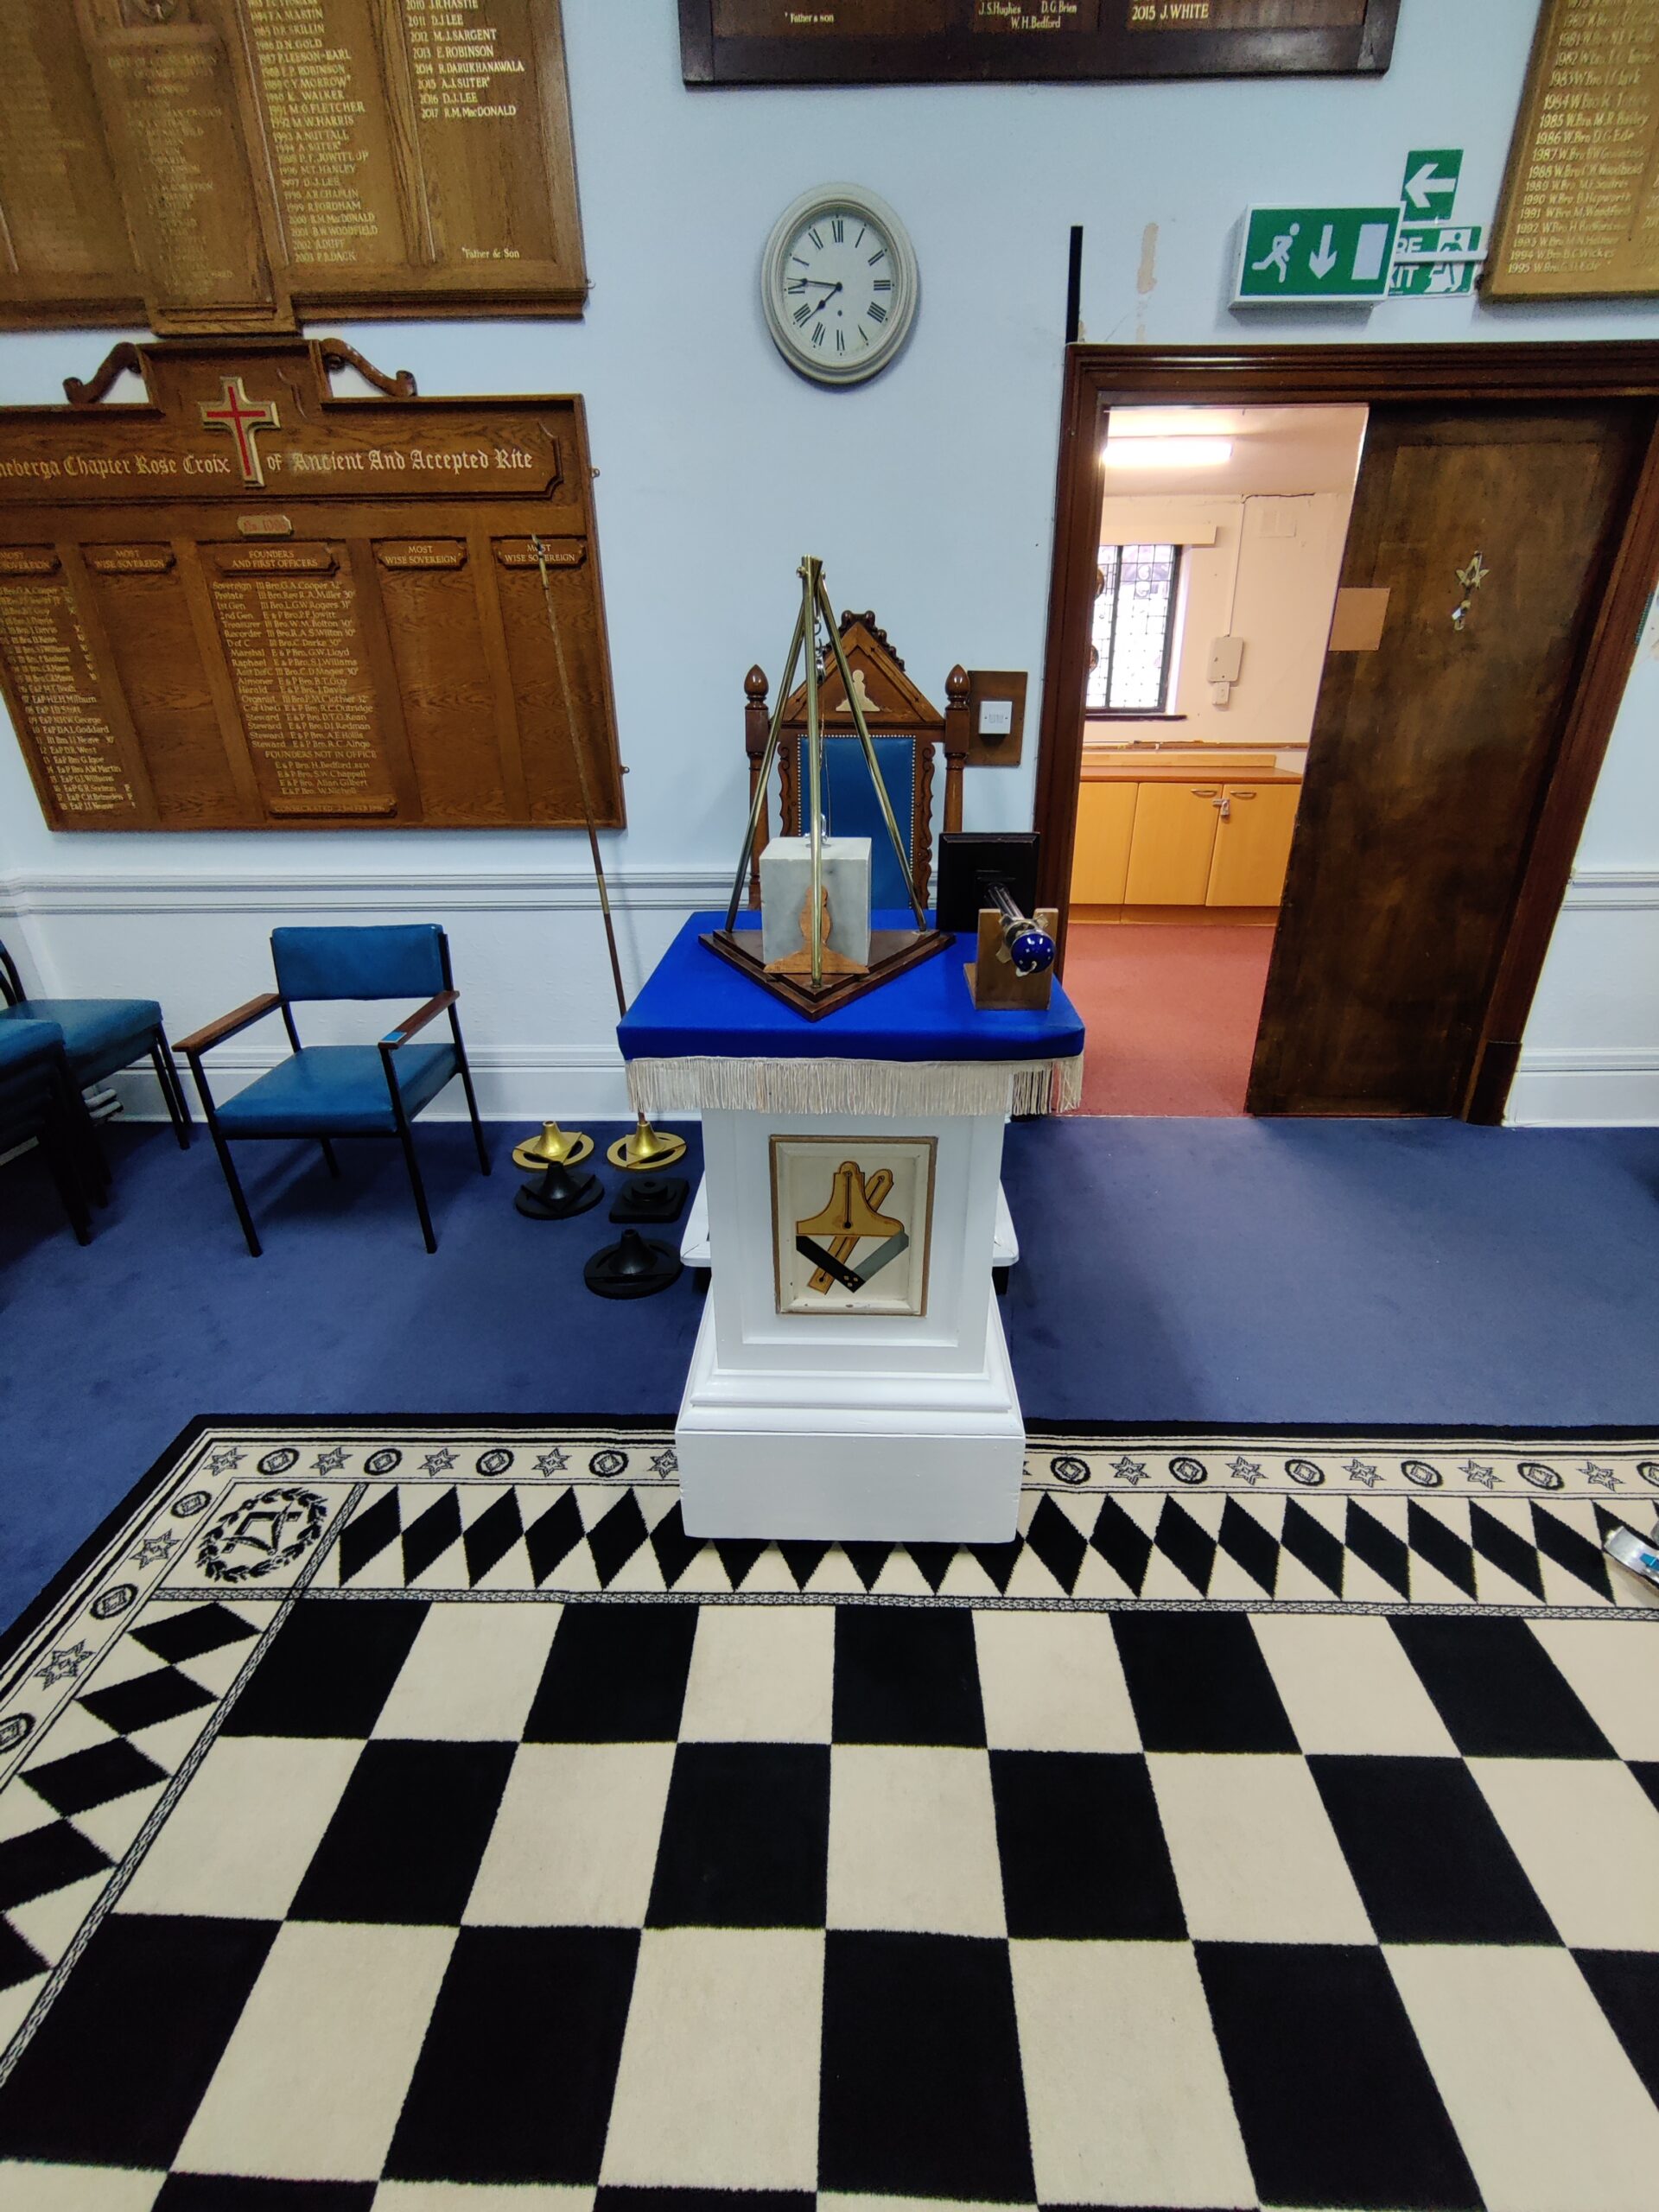 Freemason checkered floor